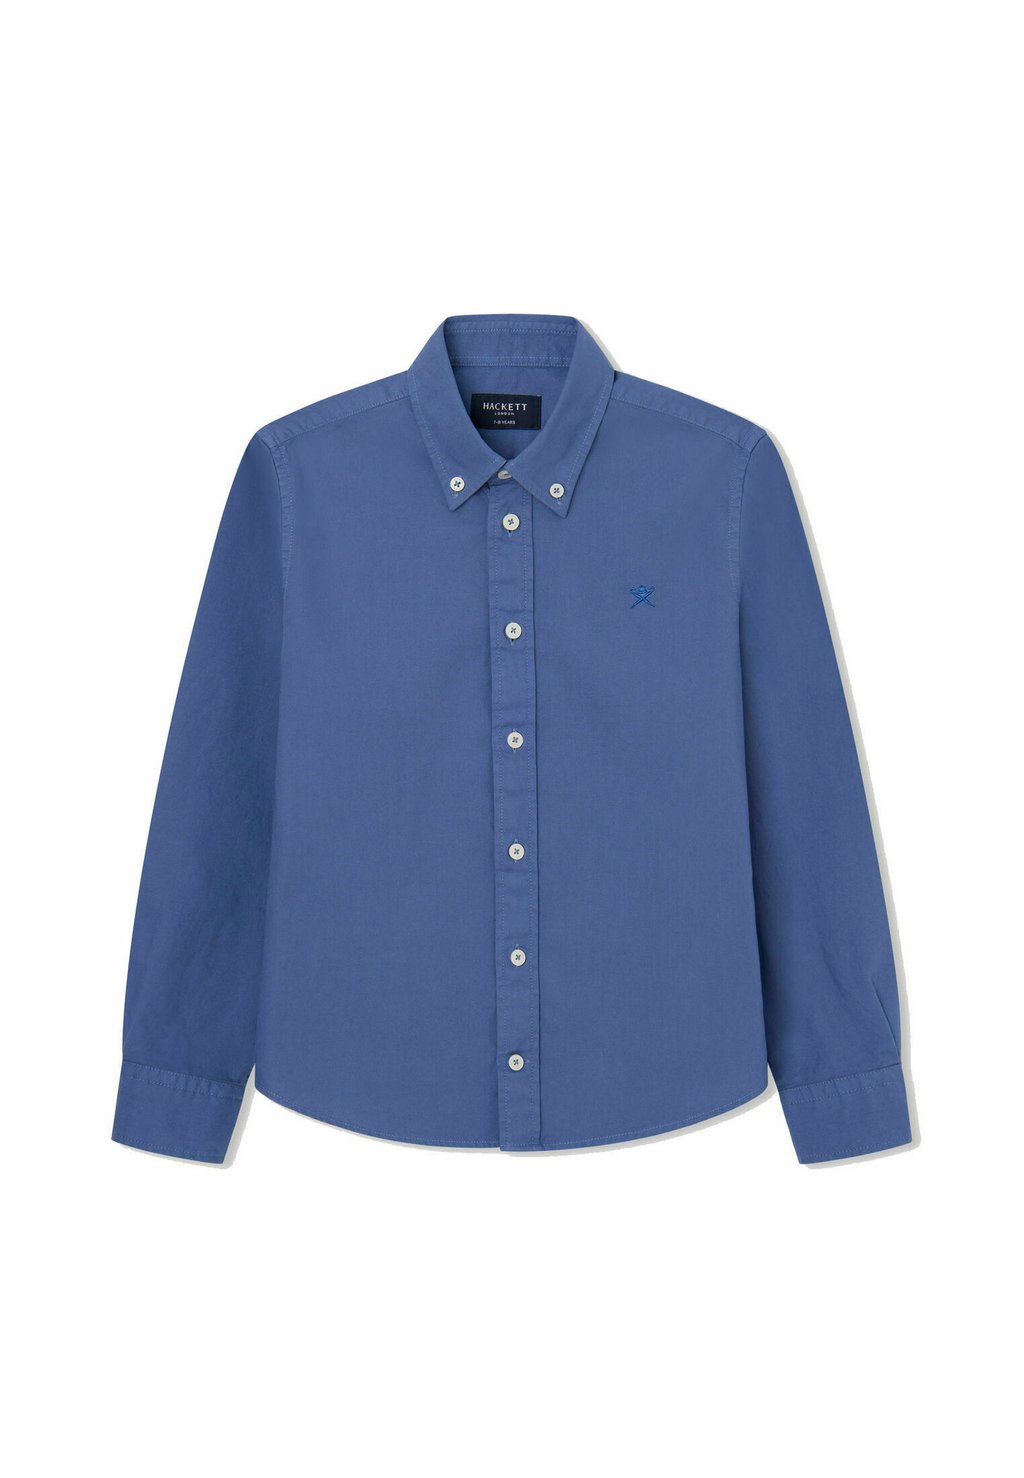 Рубашка OXFORD Hackett London, синий рубашка hackett oxford синий